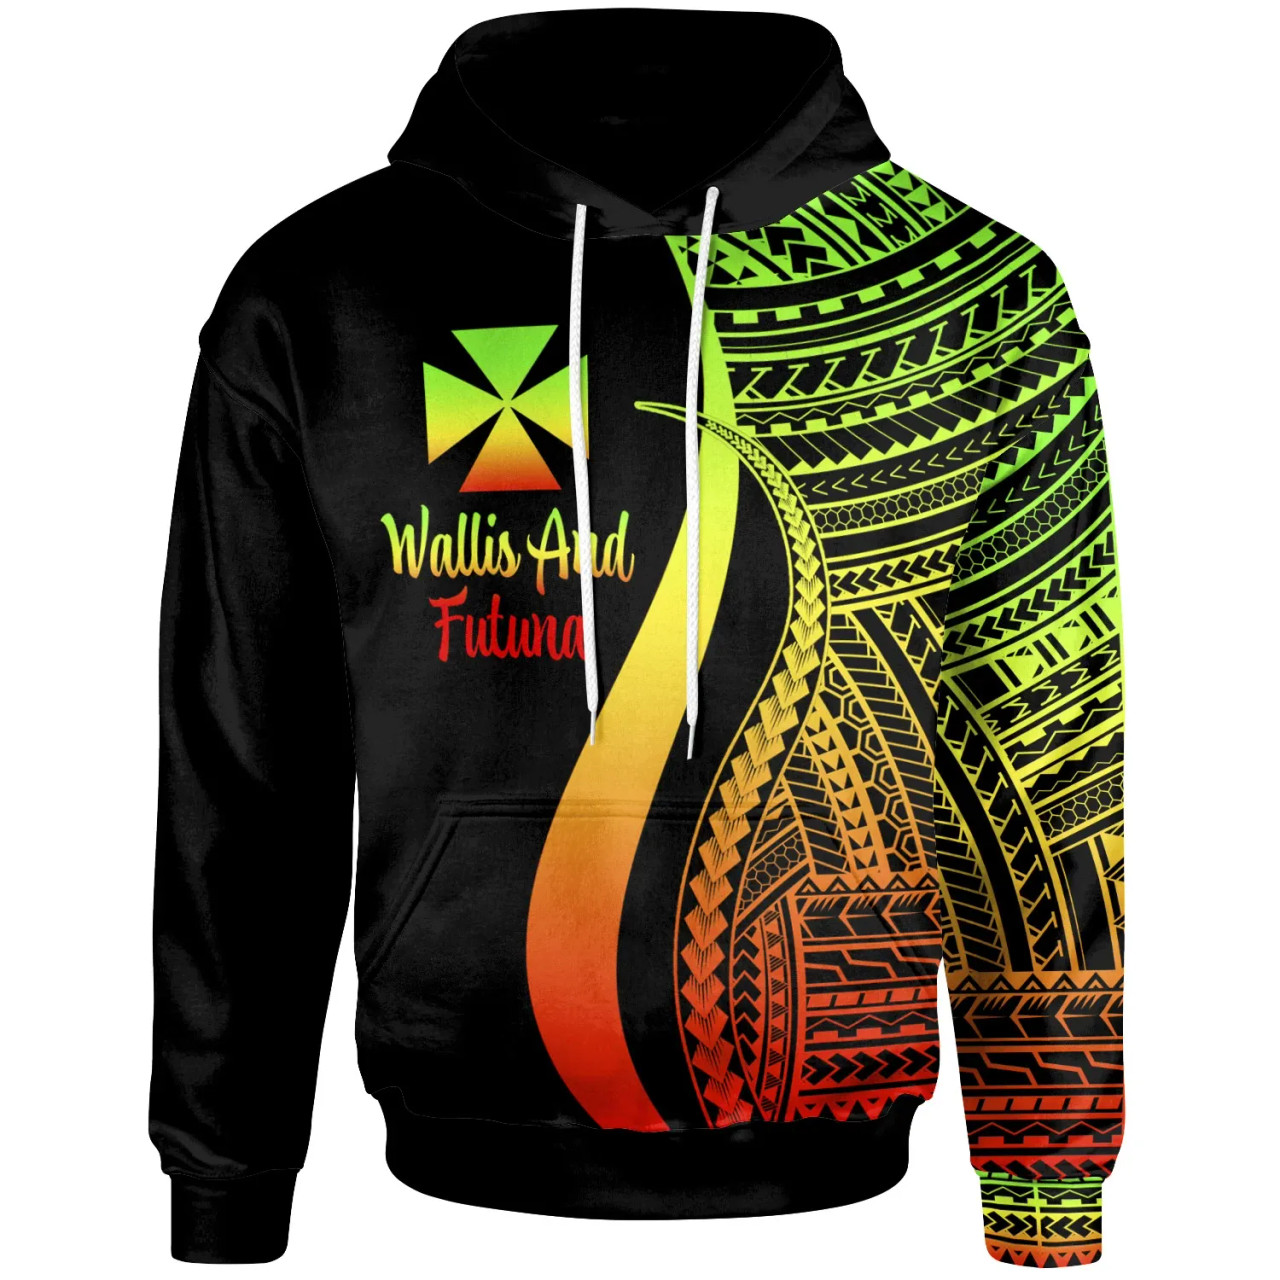 Wallis and Futuna Hoodie Reggae - Tentacle Tribal Pattern